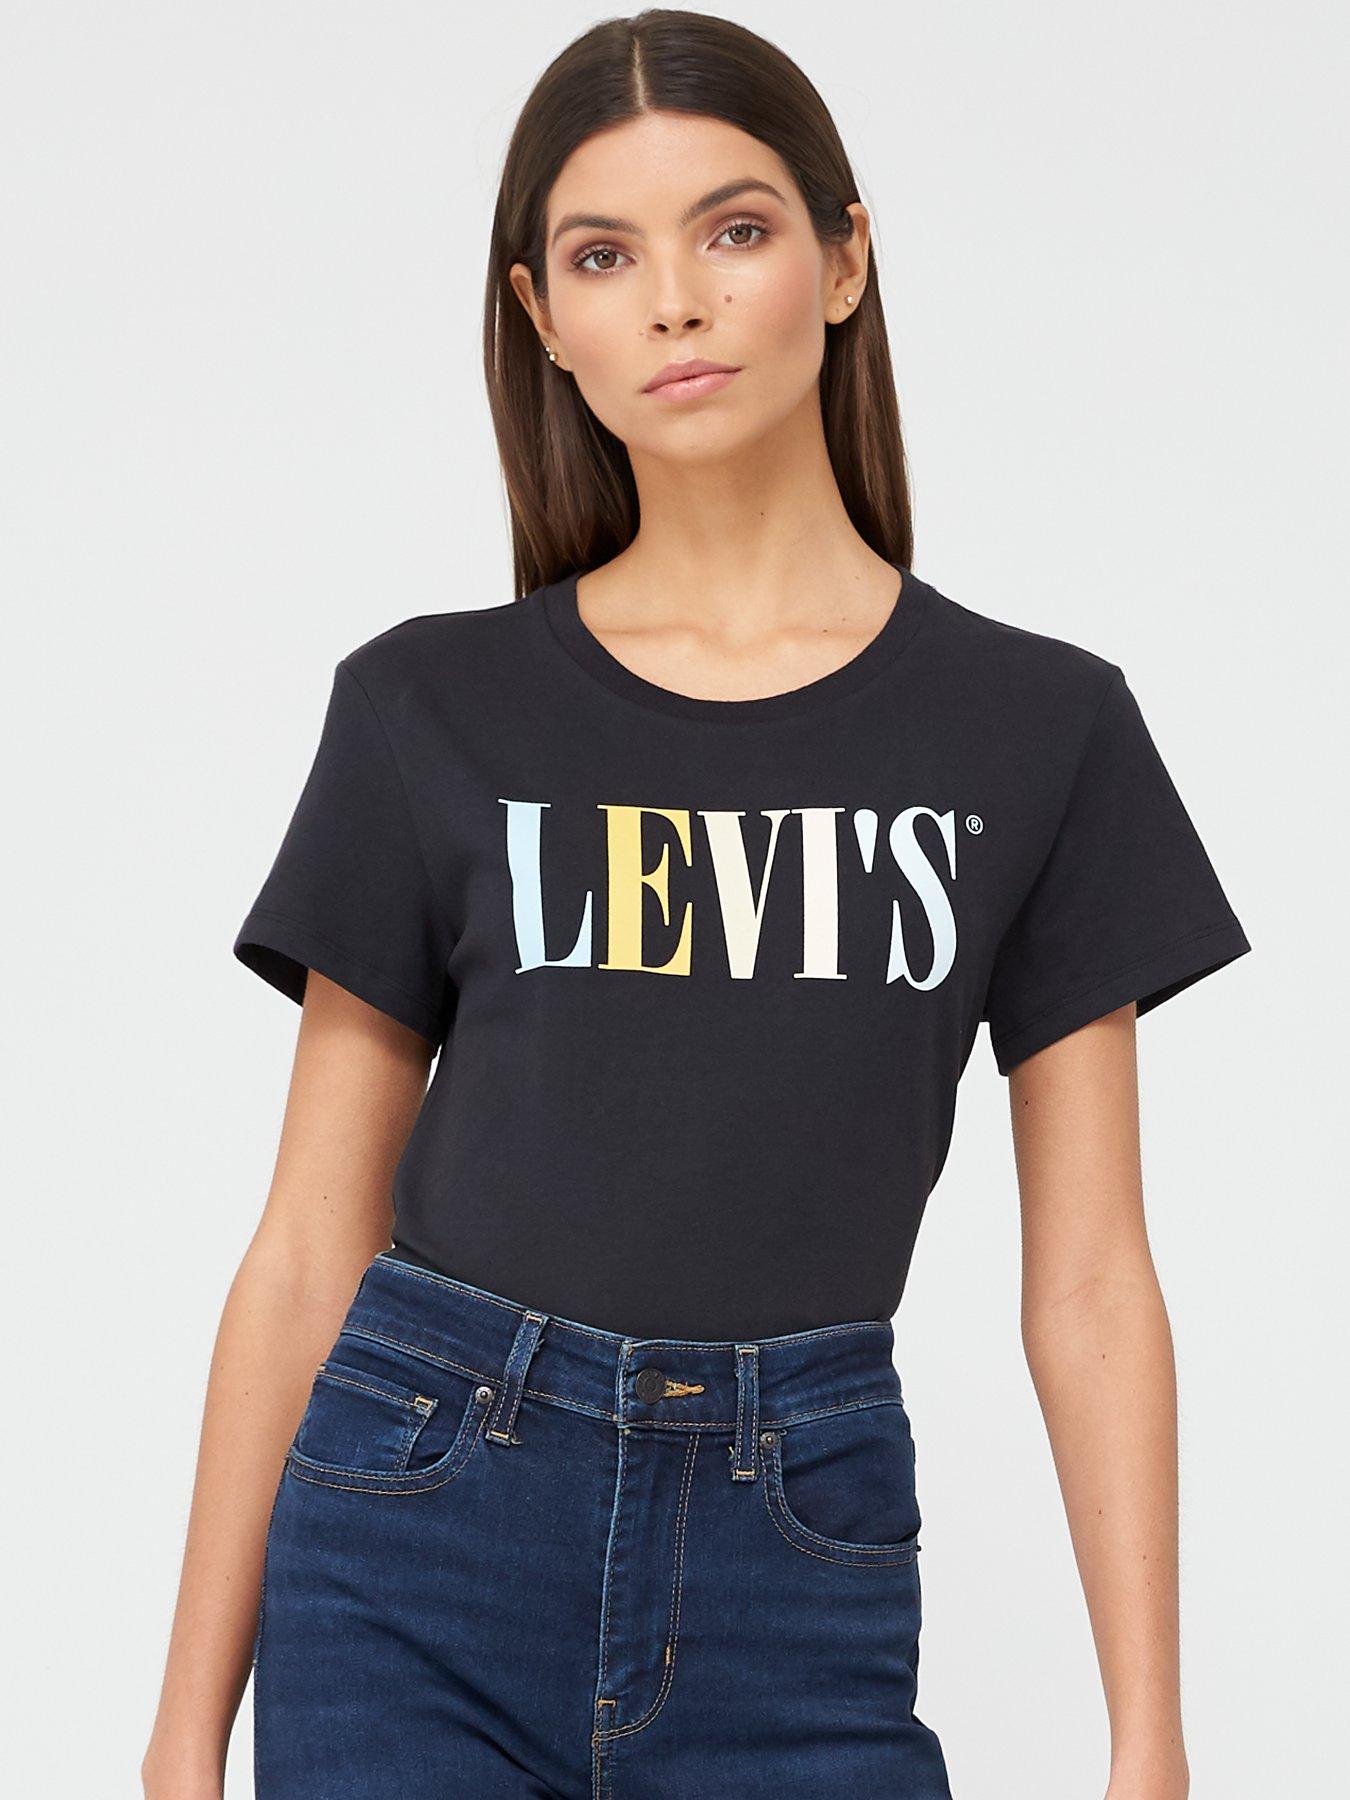 ladies black levi t shirt